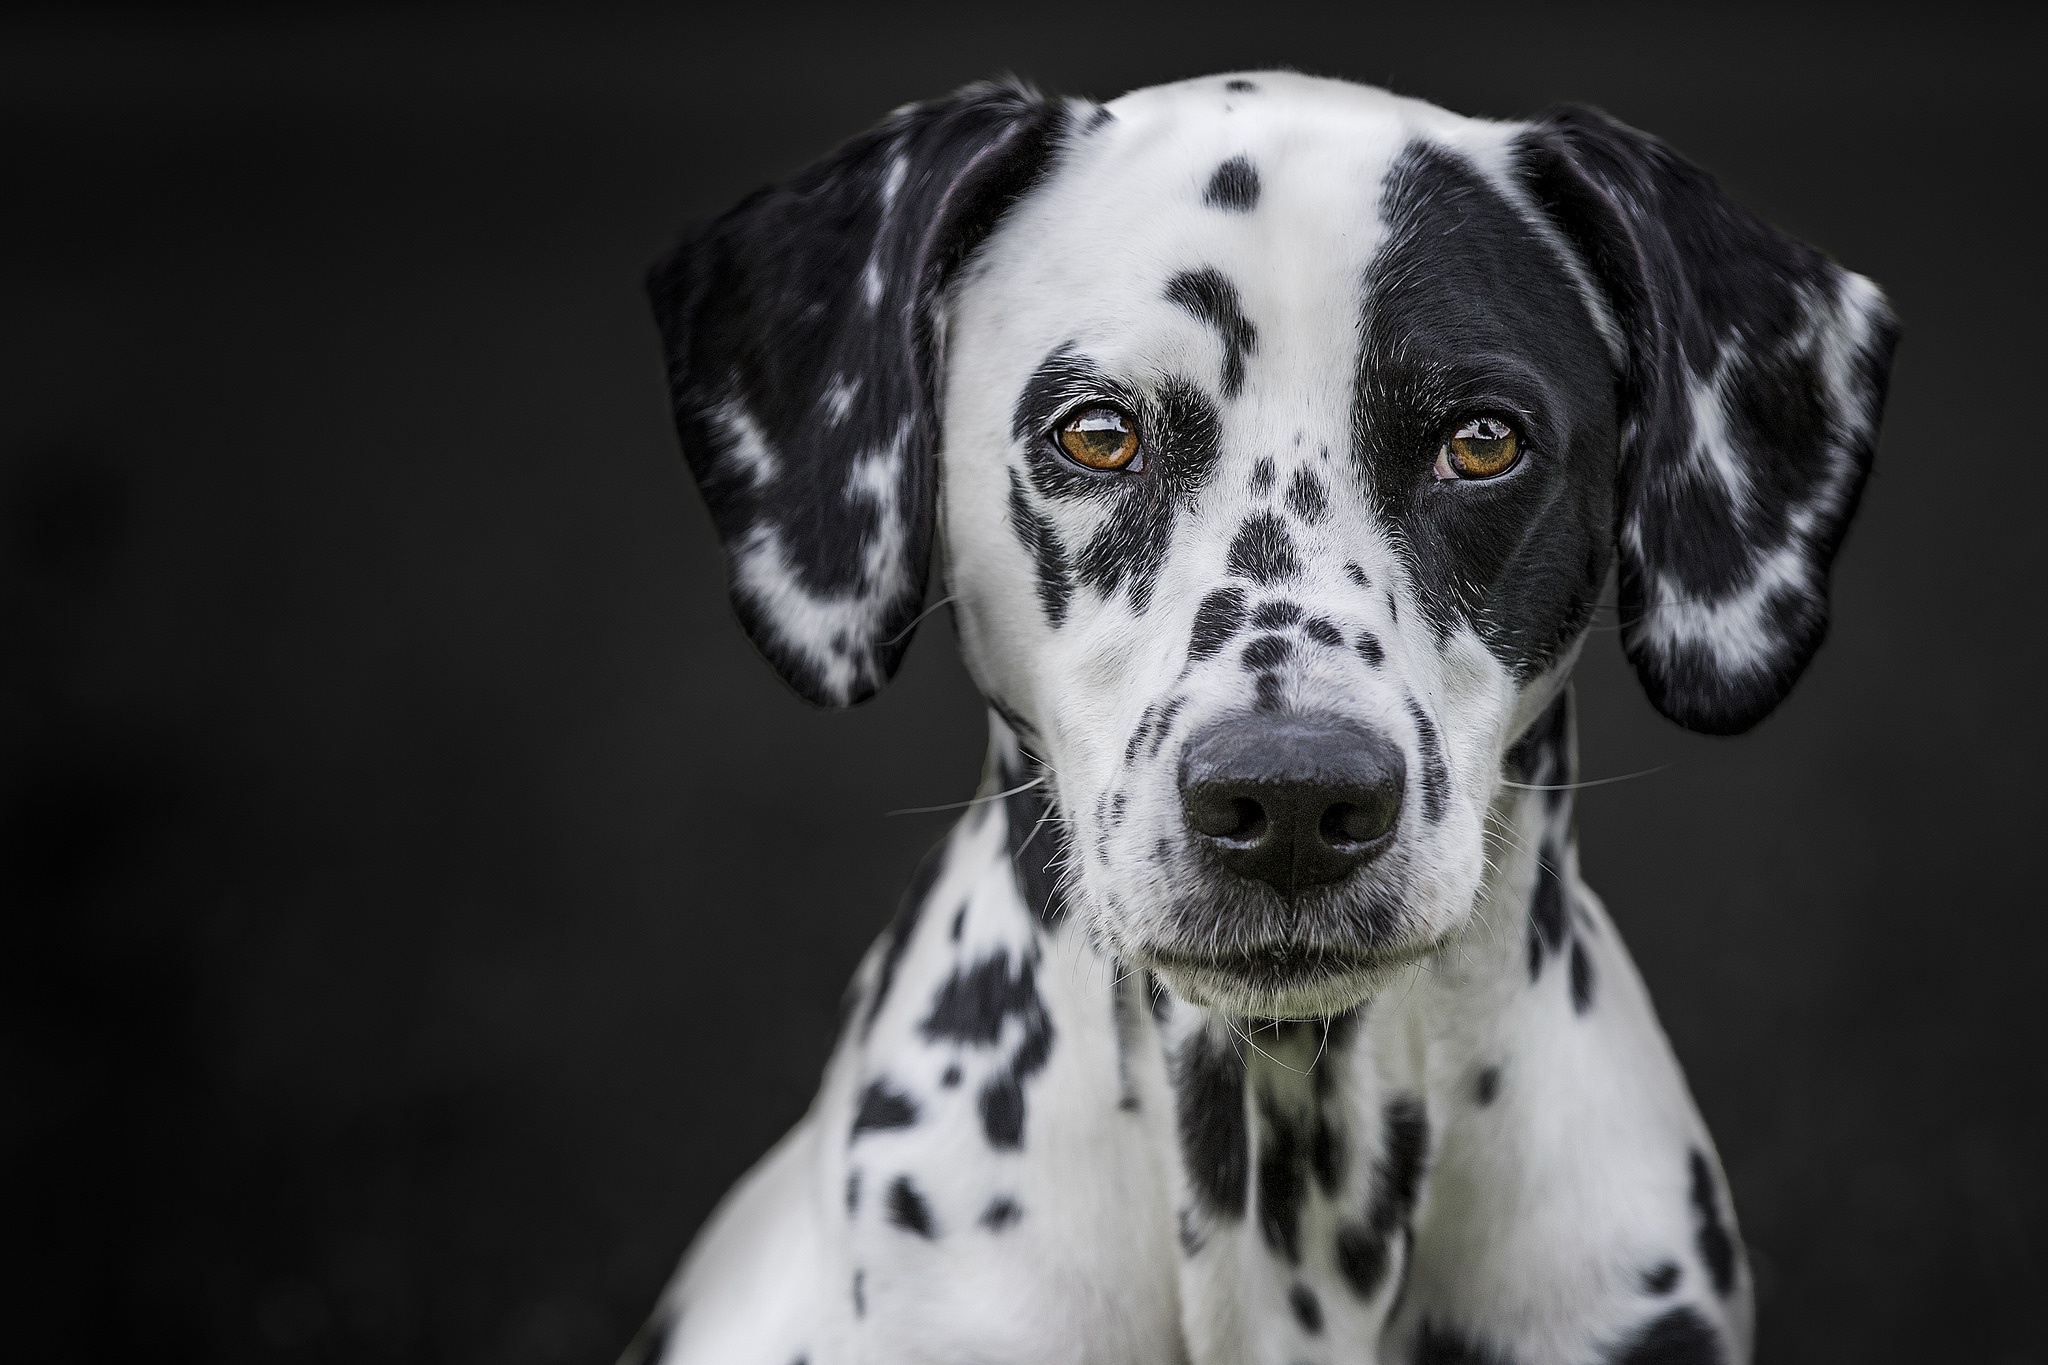 General 2048x1365 face black white dog animals pet Dalmatian closeup